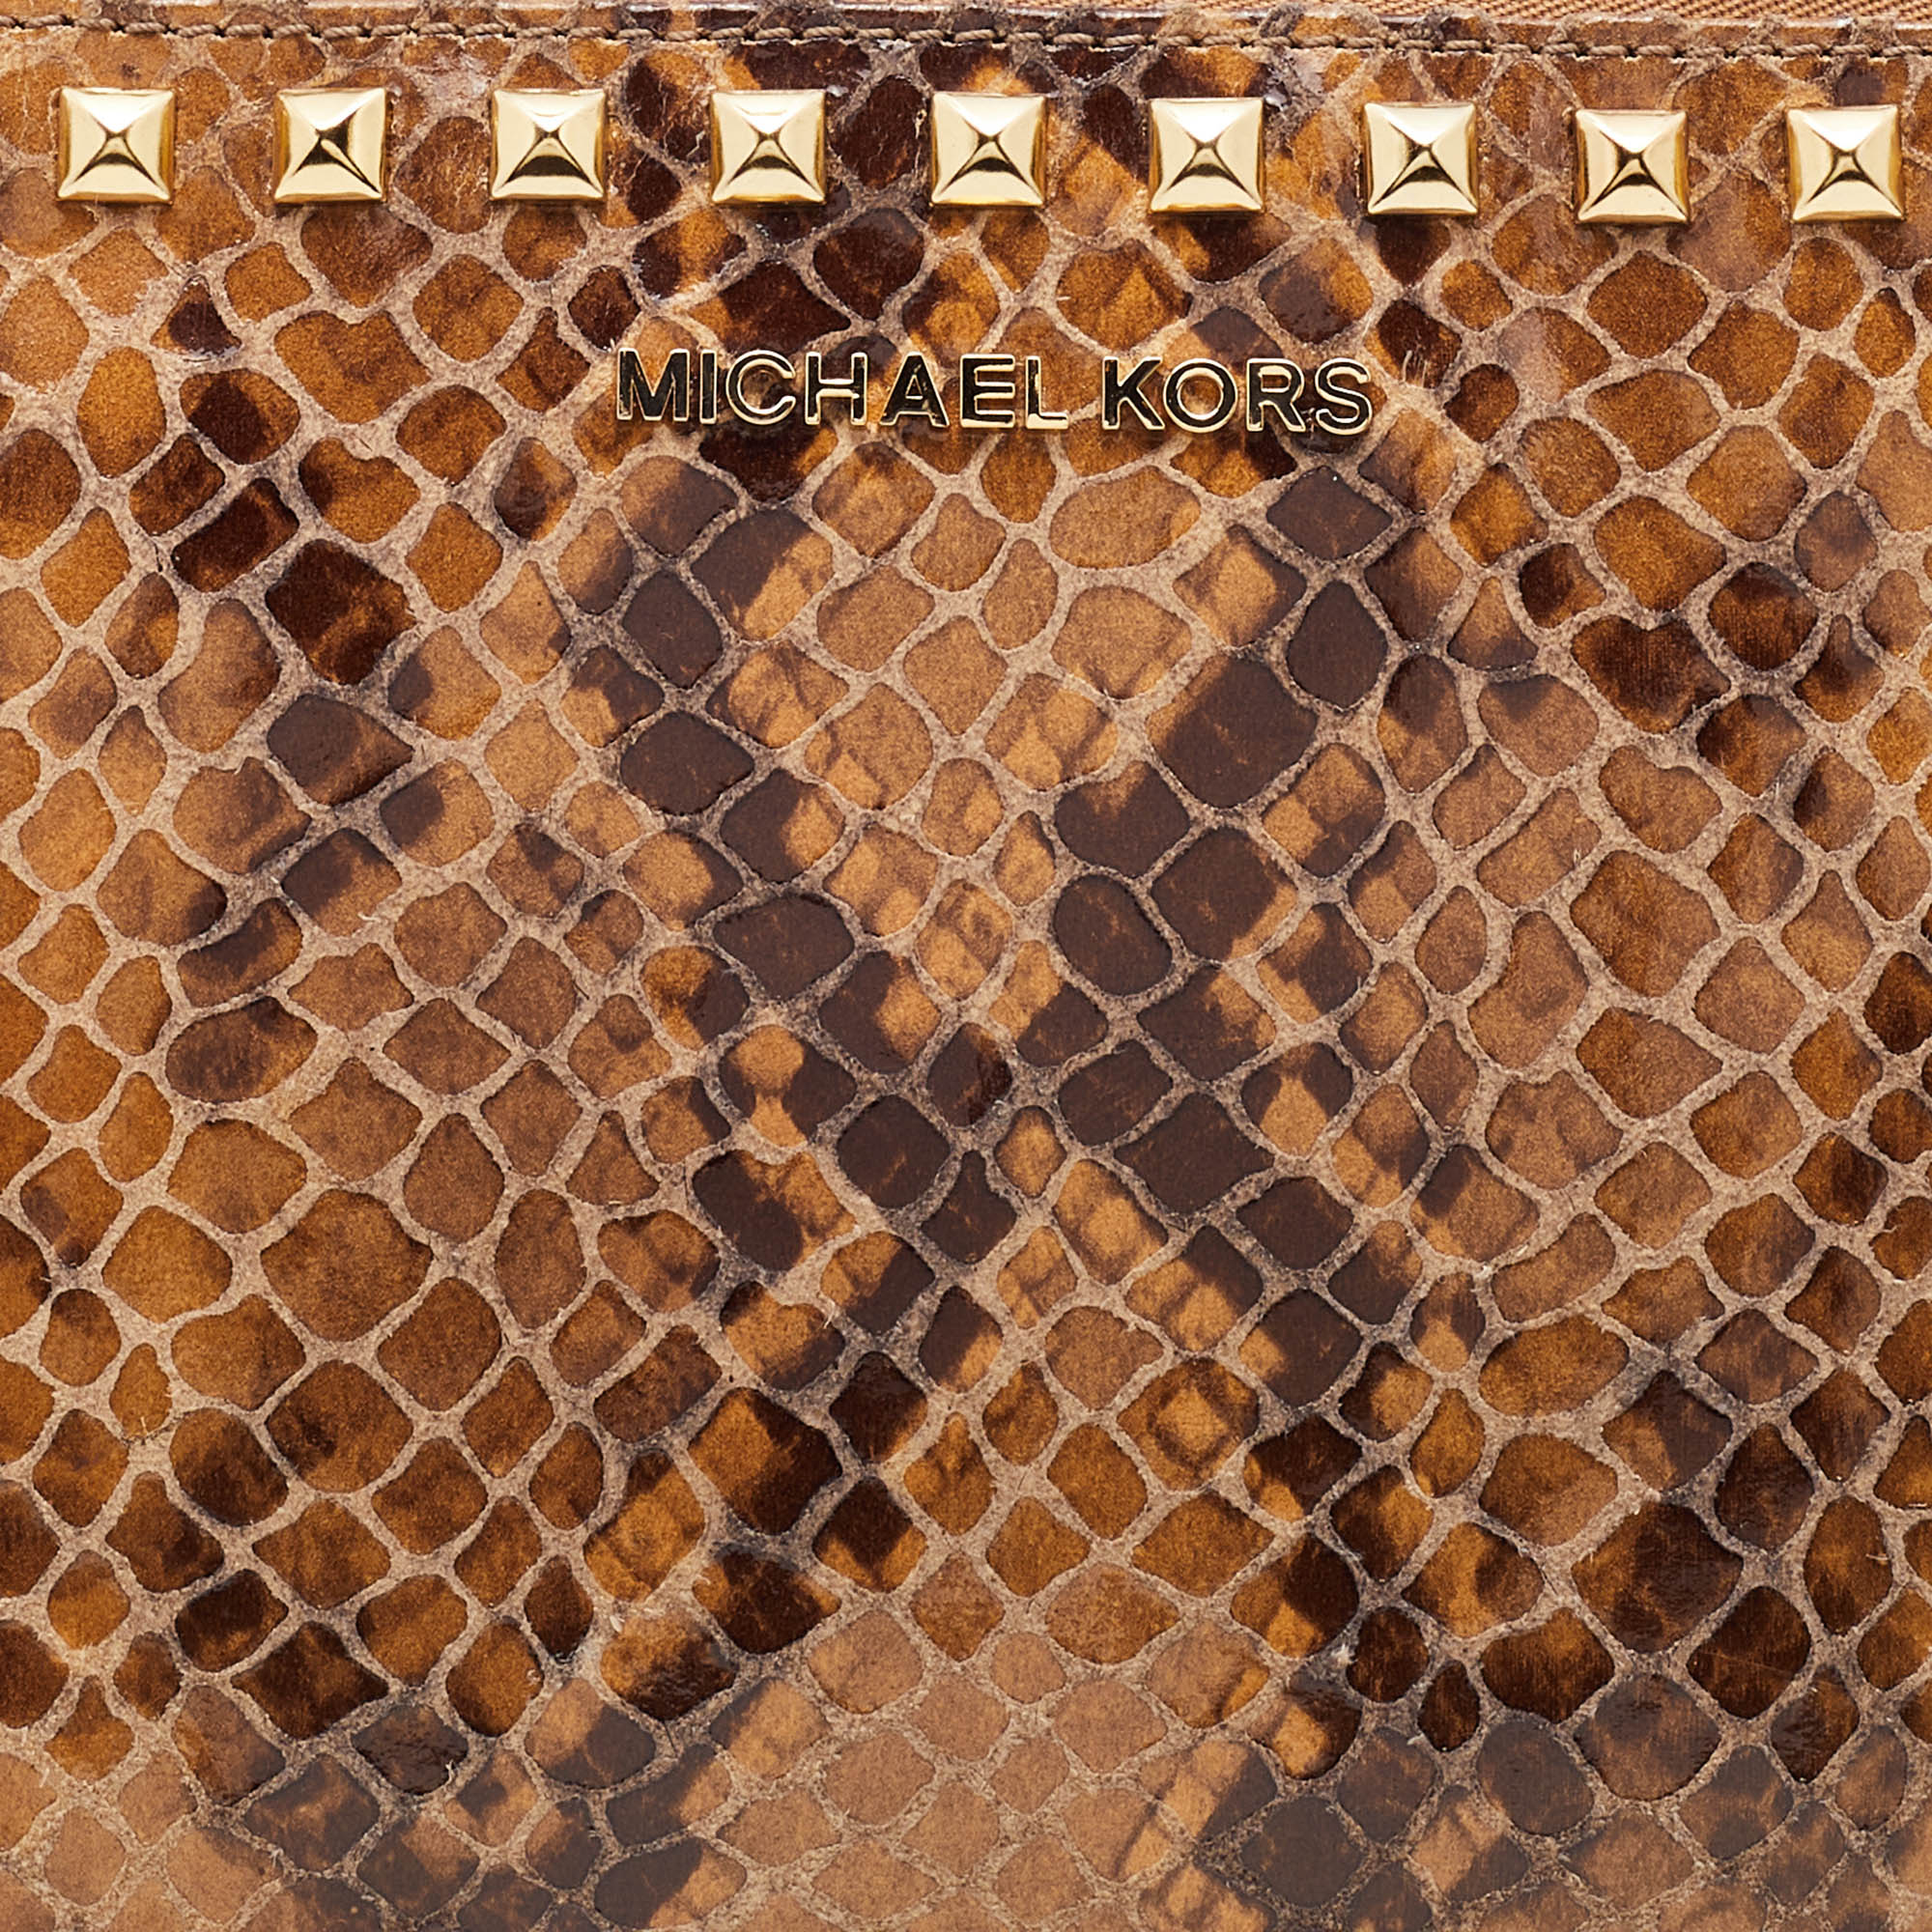 Michael Kors Brown Snakeskin Embossed Leather Studded Sandrine Clutch